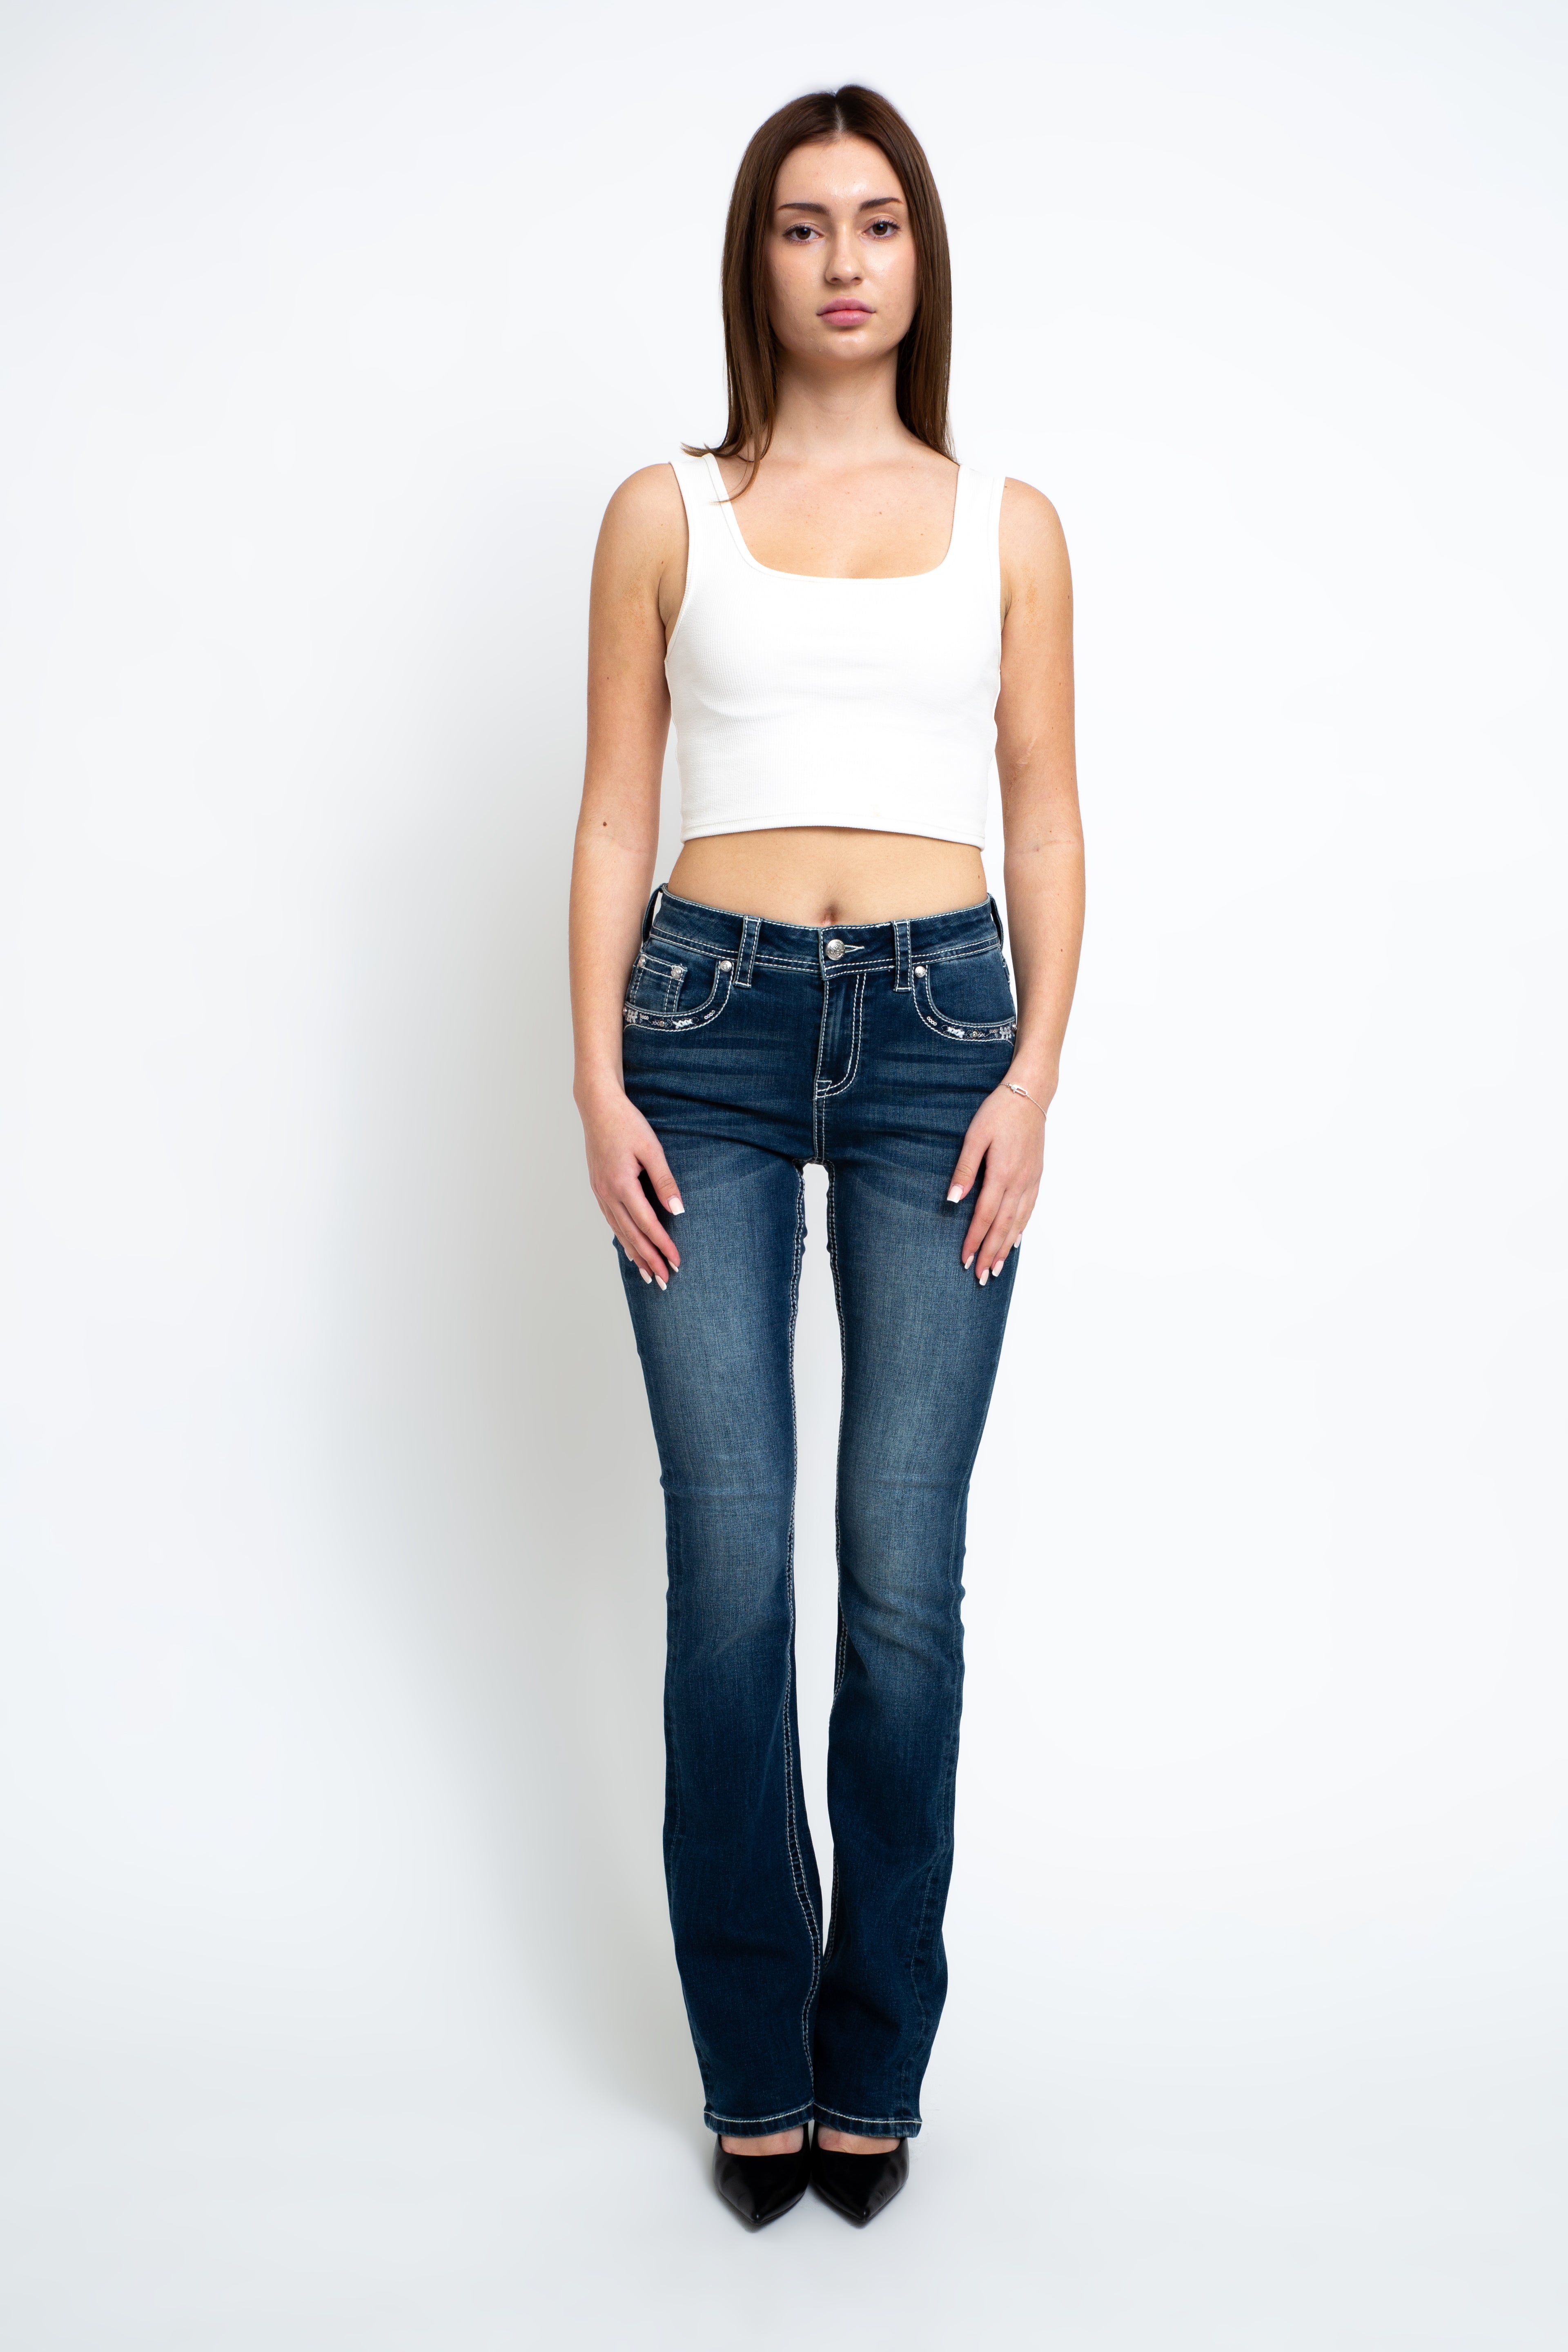 embellished jeans - womens western denim